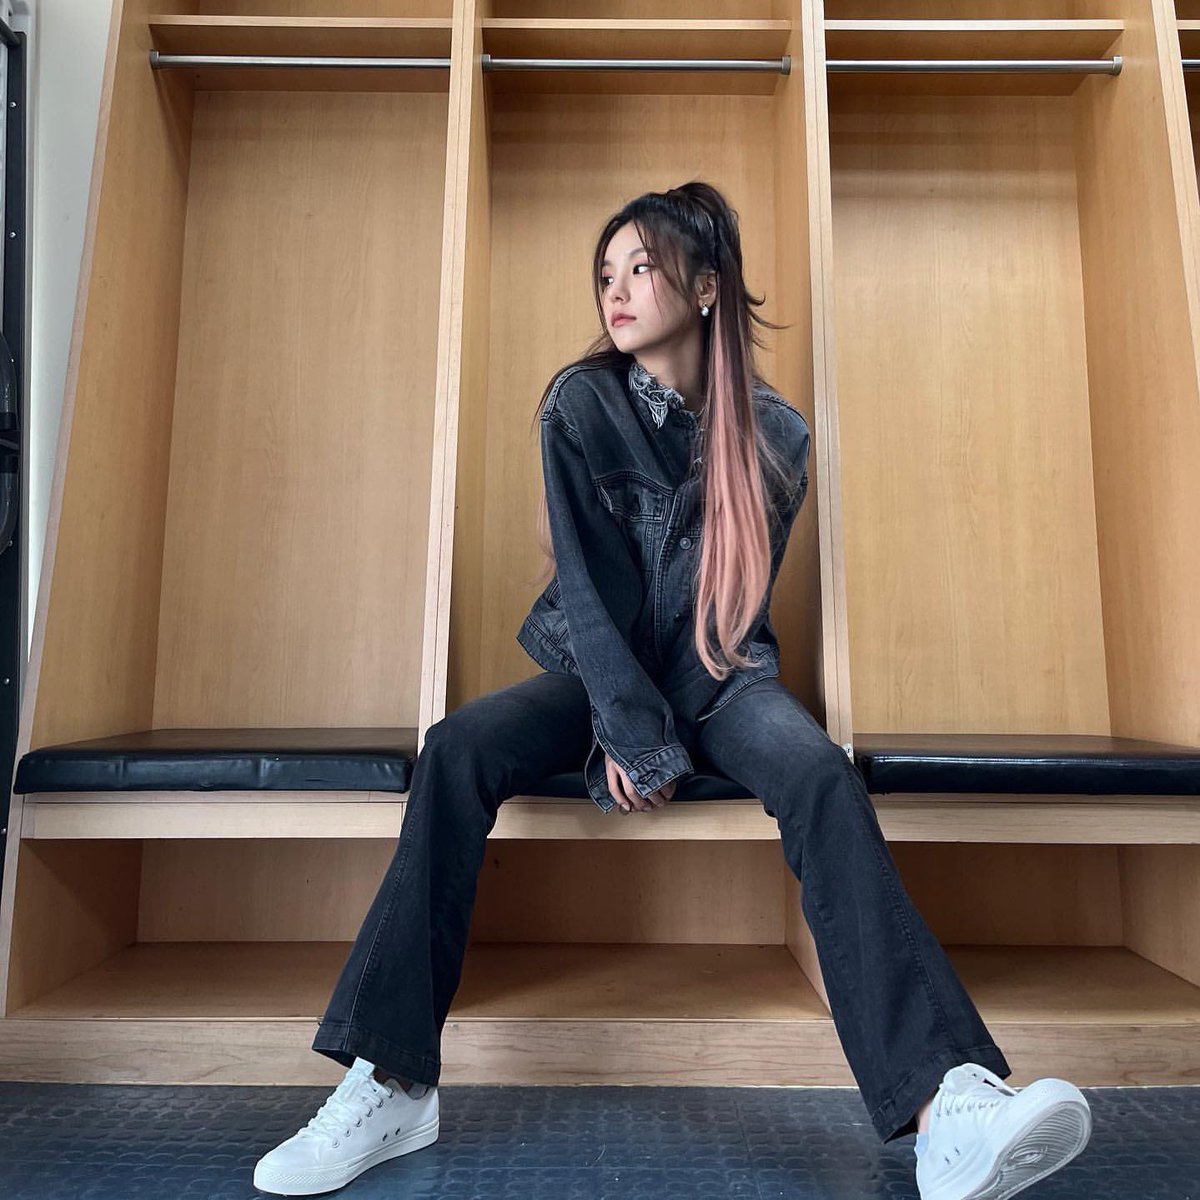 Ninja Yeji 🖤 🐈‍⬛ On Twitter Yeji In Her Canadian Tuxedo Outfit 😆